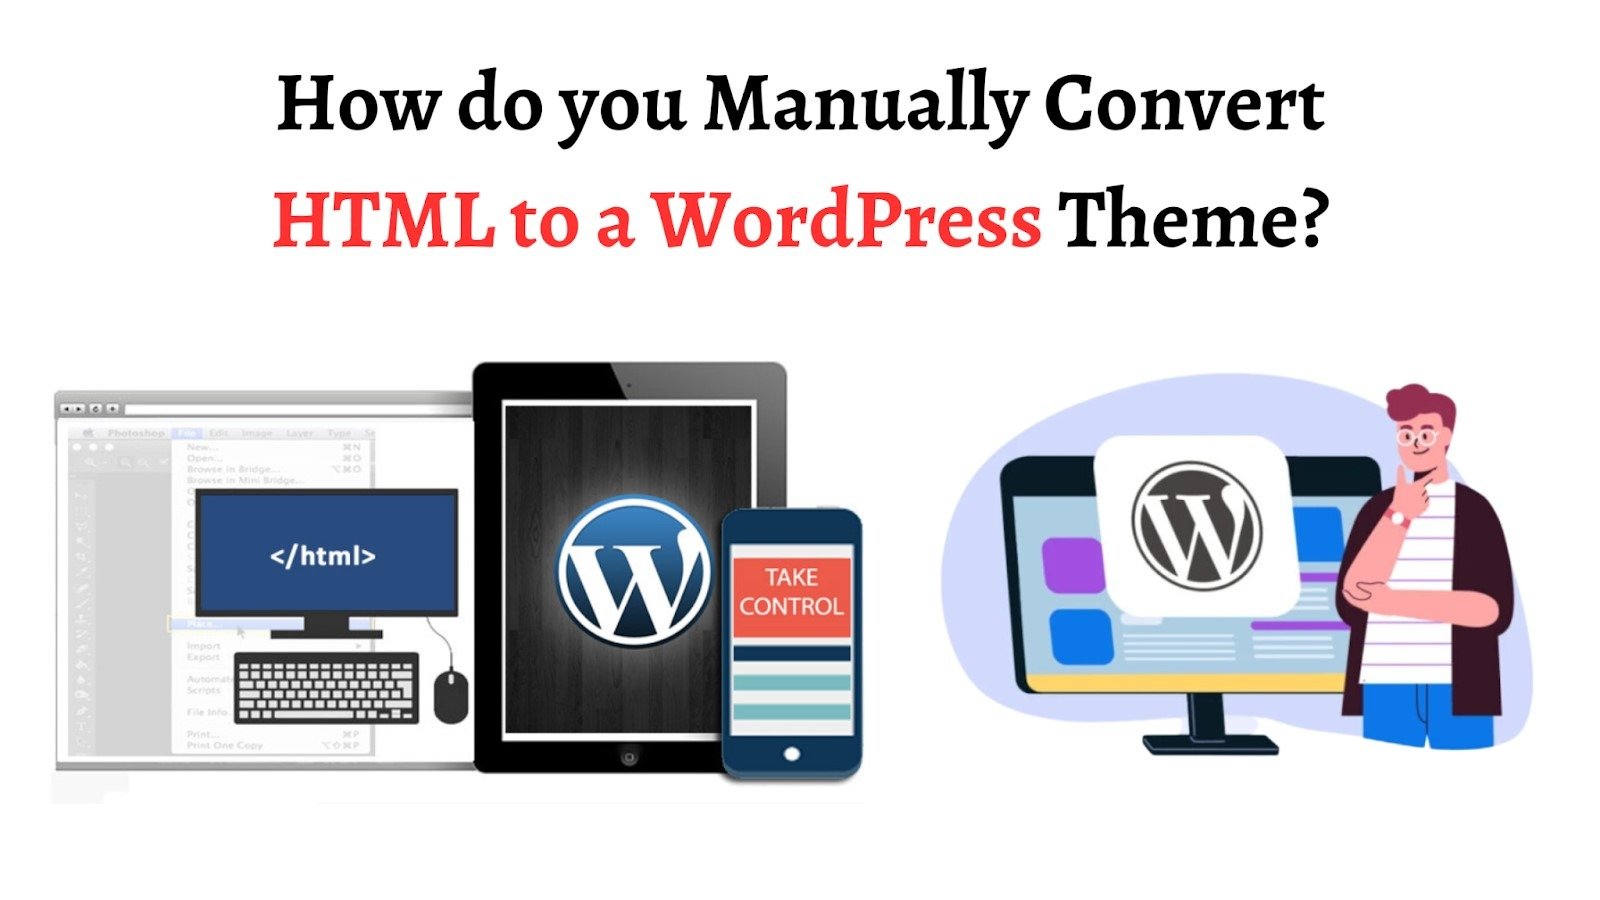 Convert HTML to a WordPress Theme